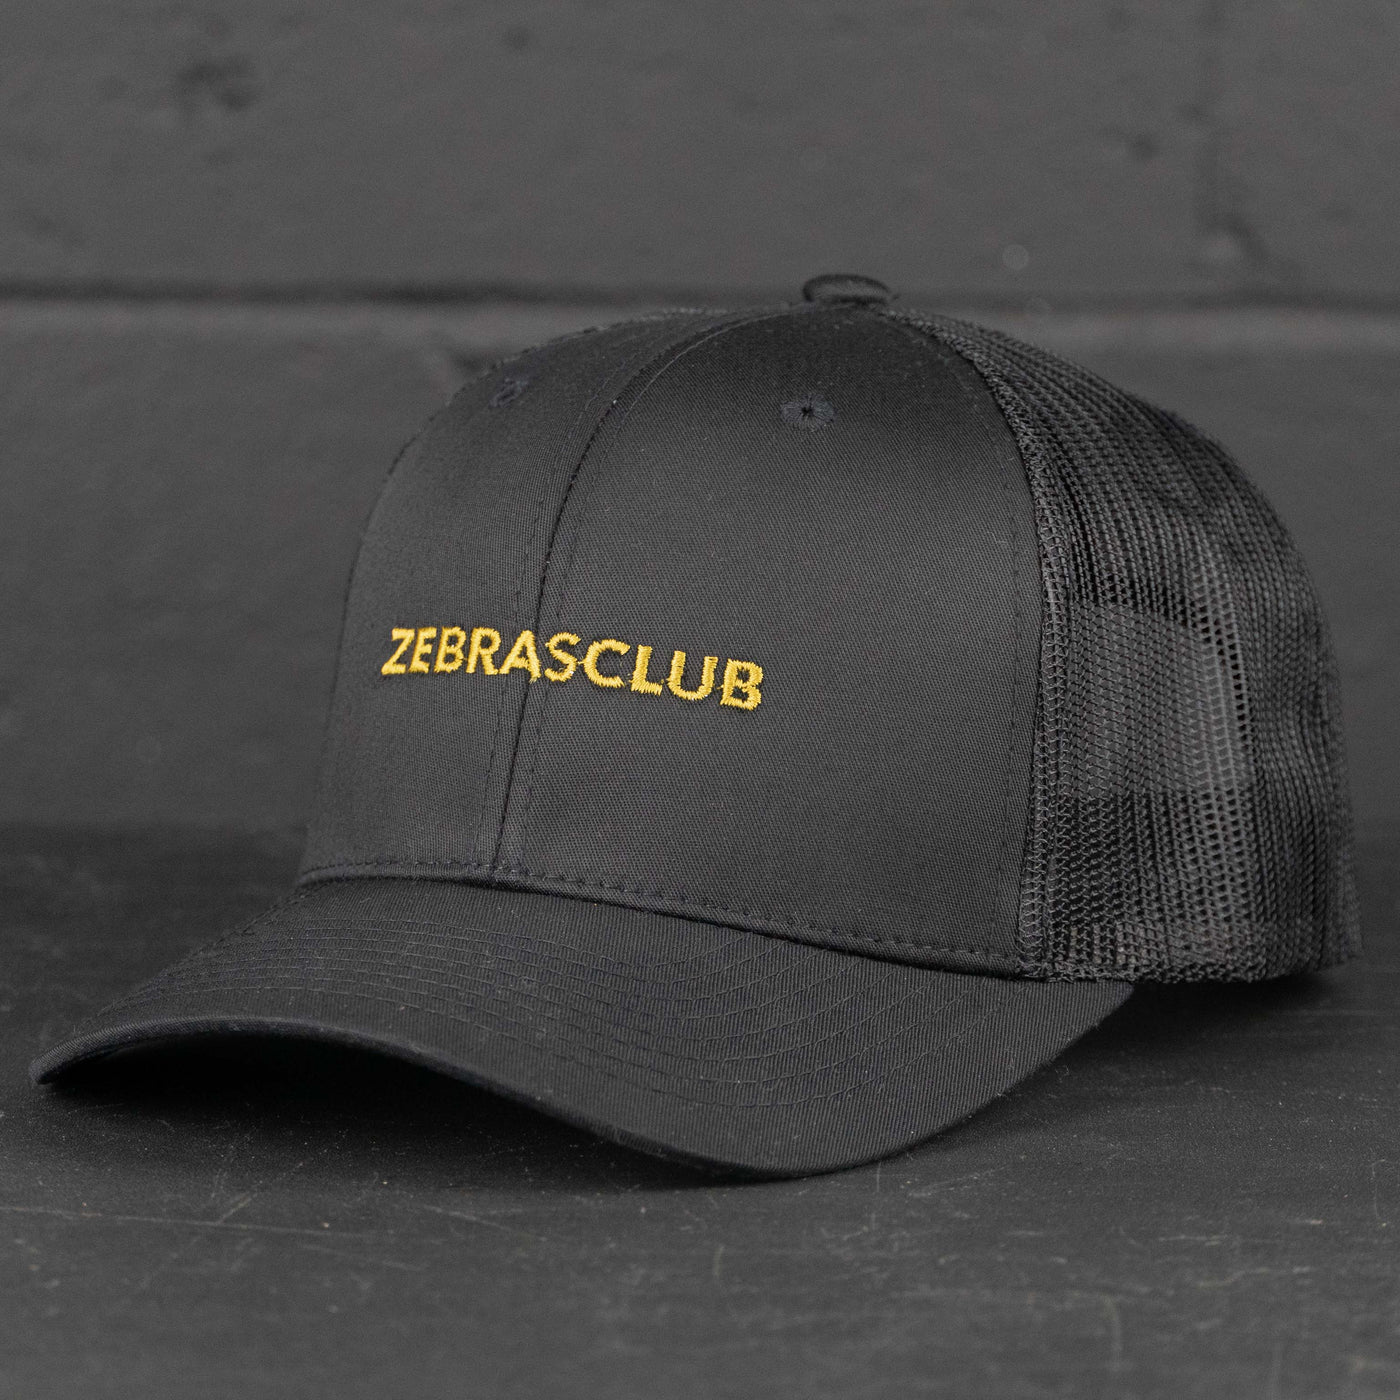 Zebrasclub snapback cap black